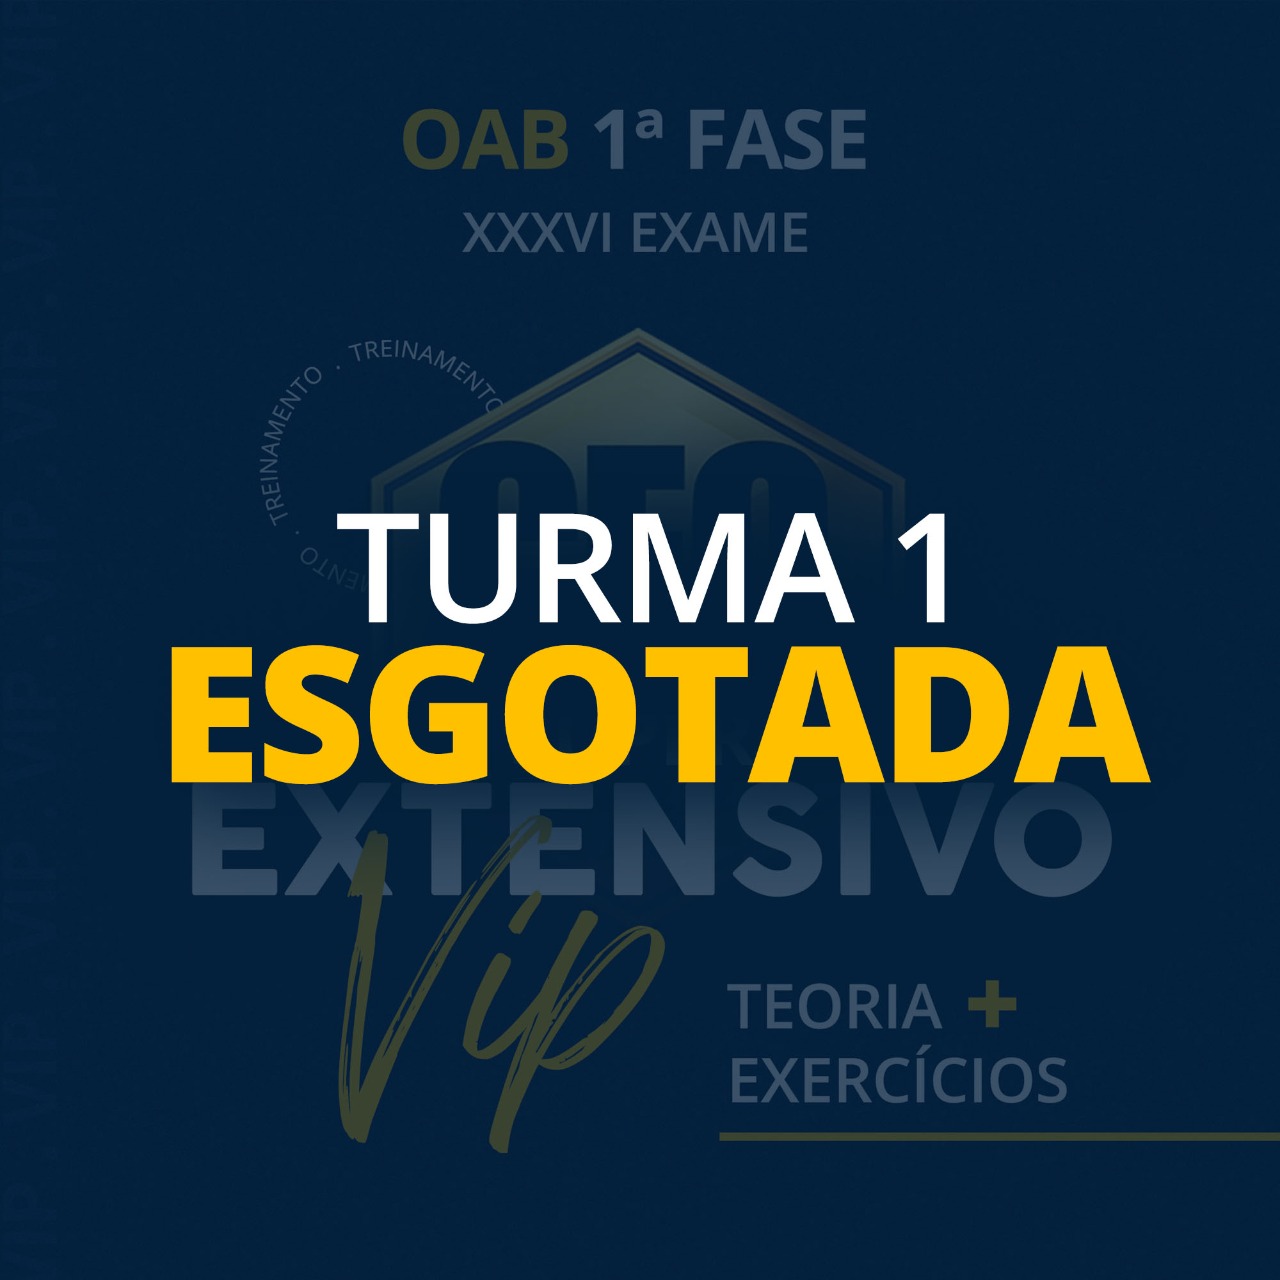 CEO SUPER EXTENSIVO VIP - TEORIA + EXERCÍCIOS - XXXVI EXAME